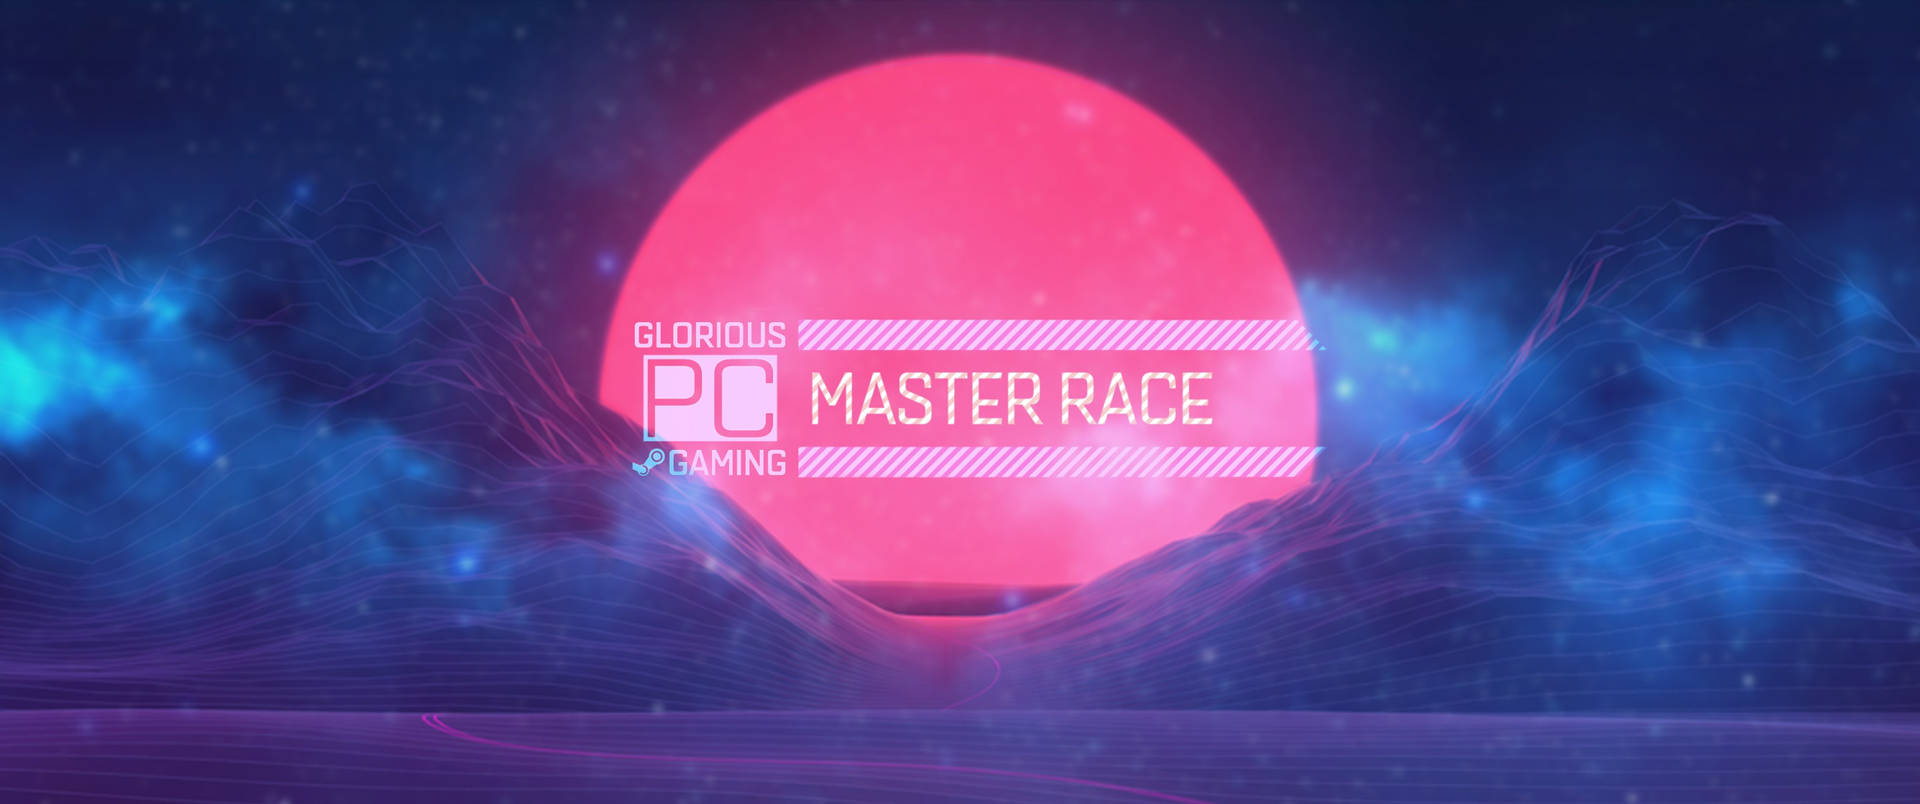 Pc Master Race Blue Smoke Glow Picture